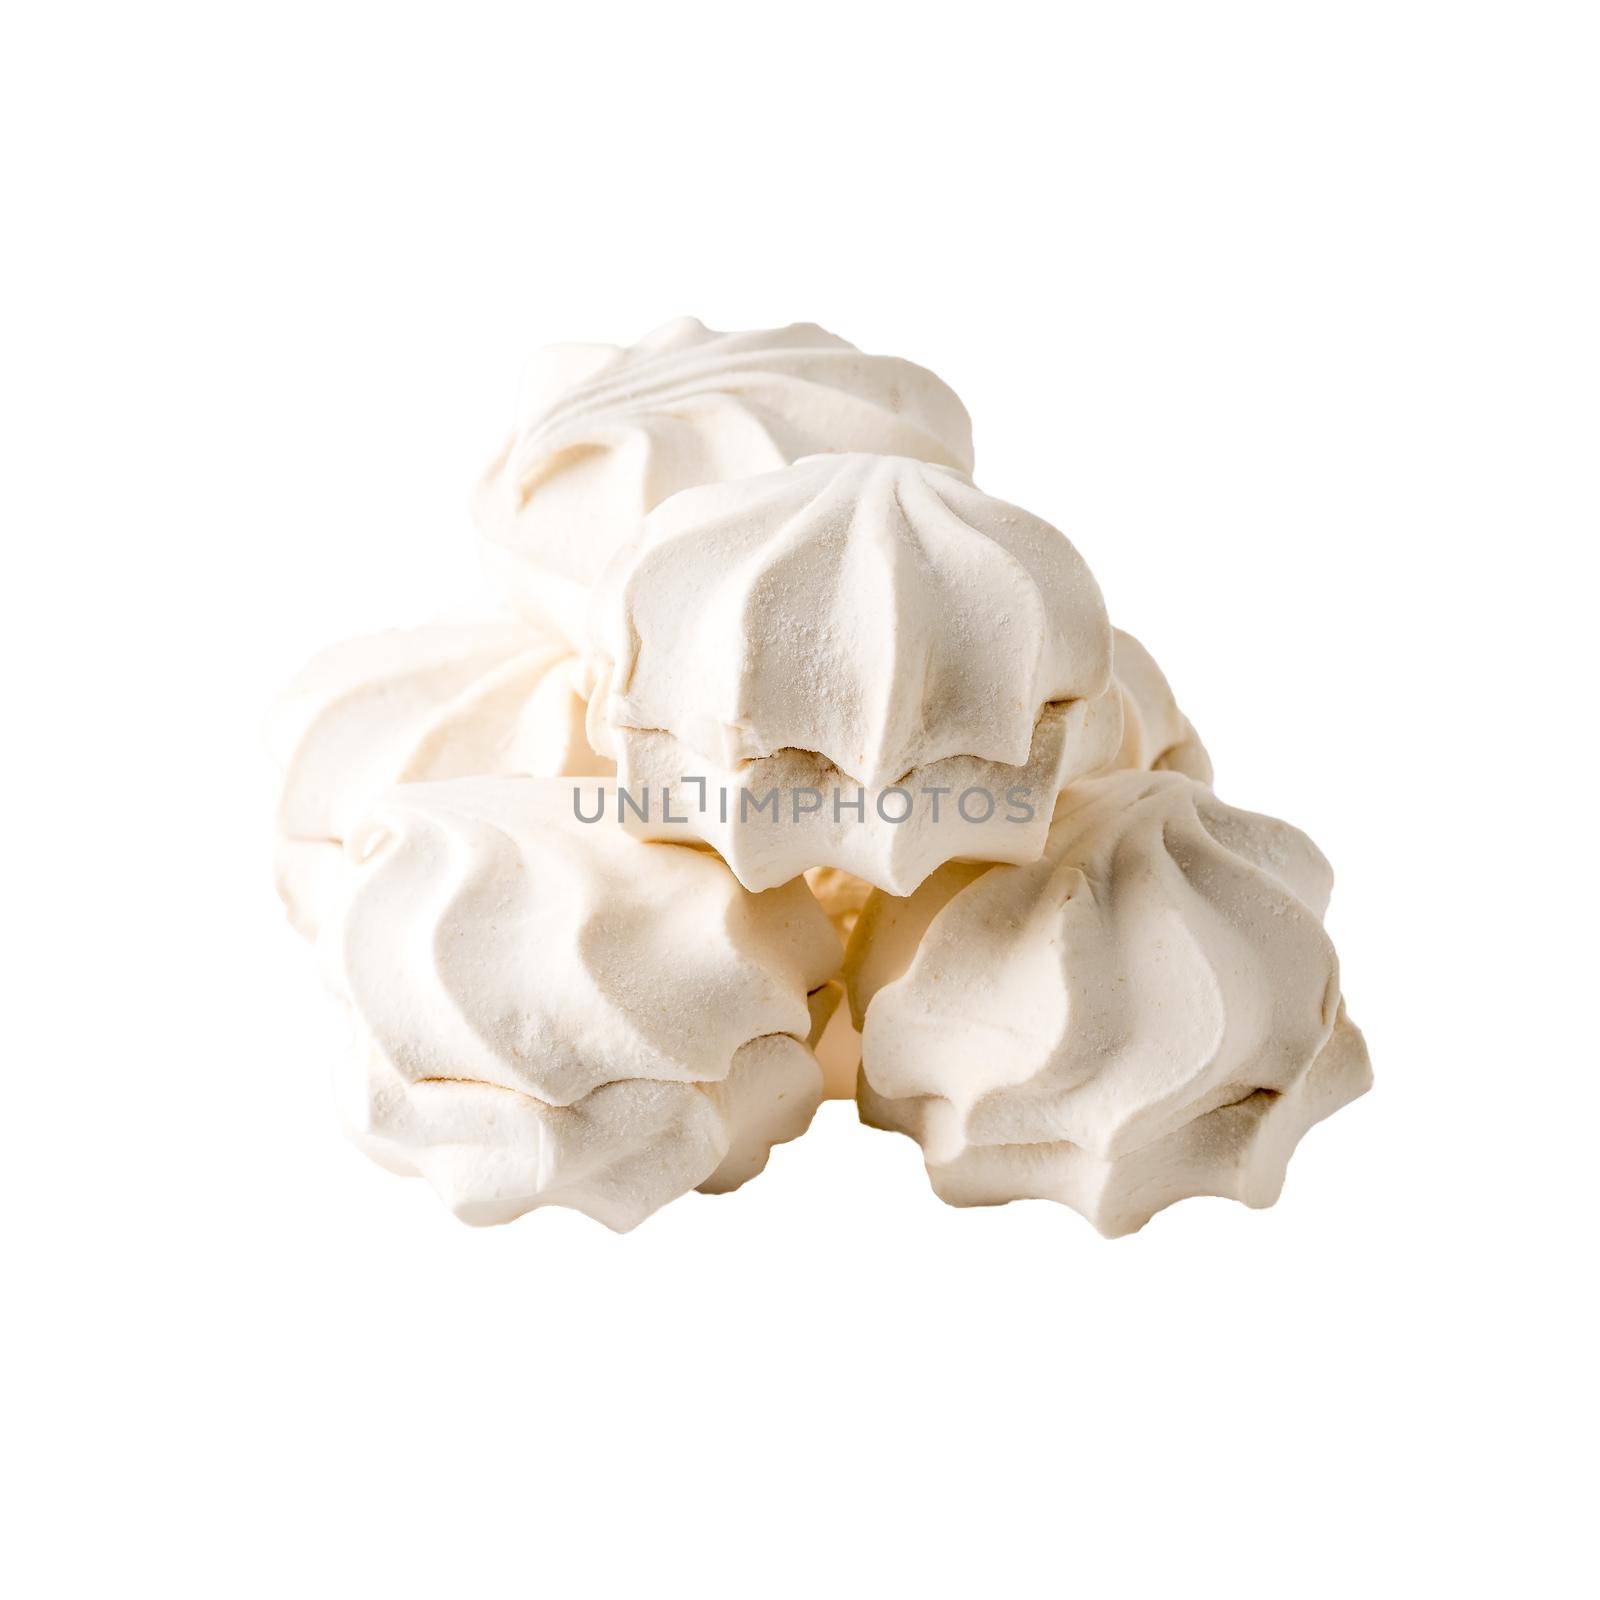 Vanilla souffle, marshmallow or zephyr isolated on white background